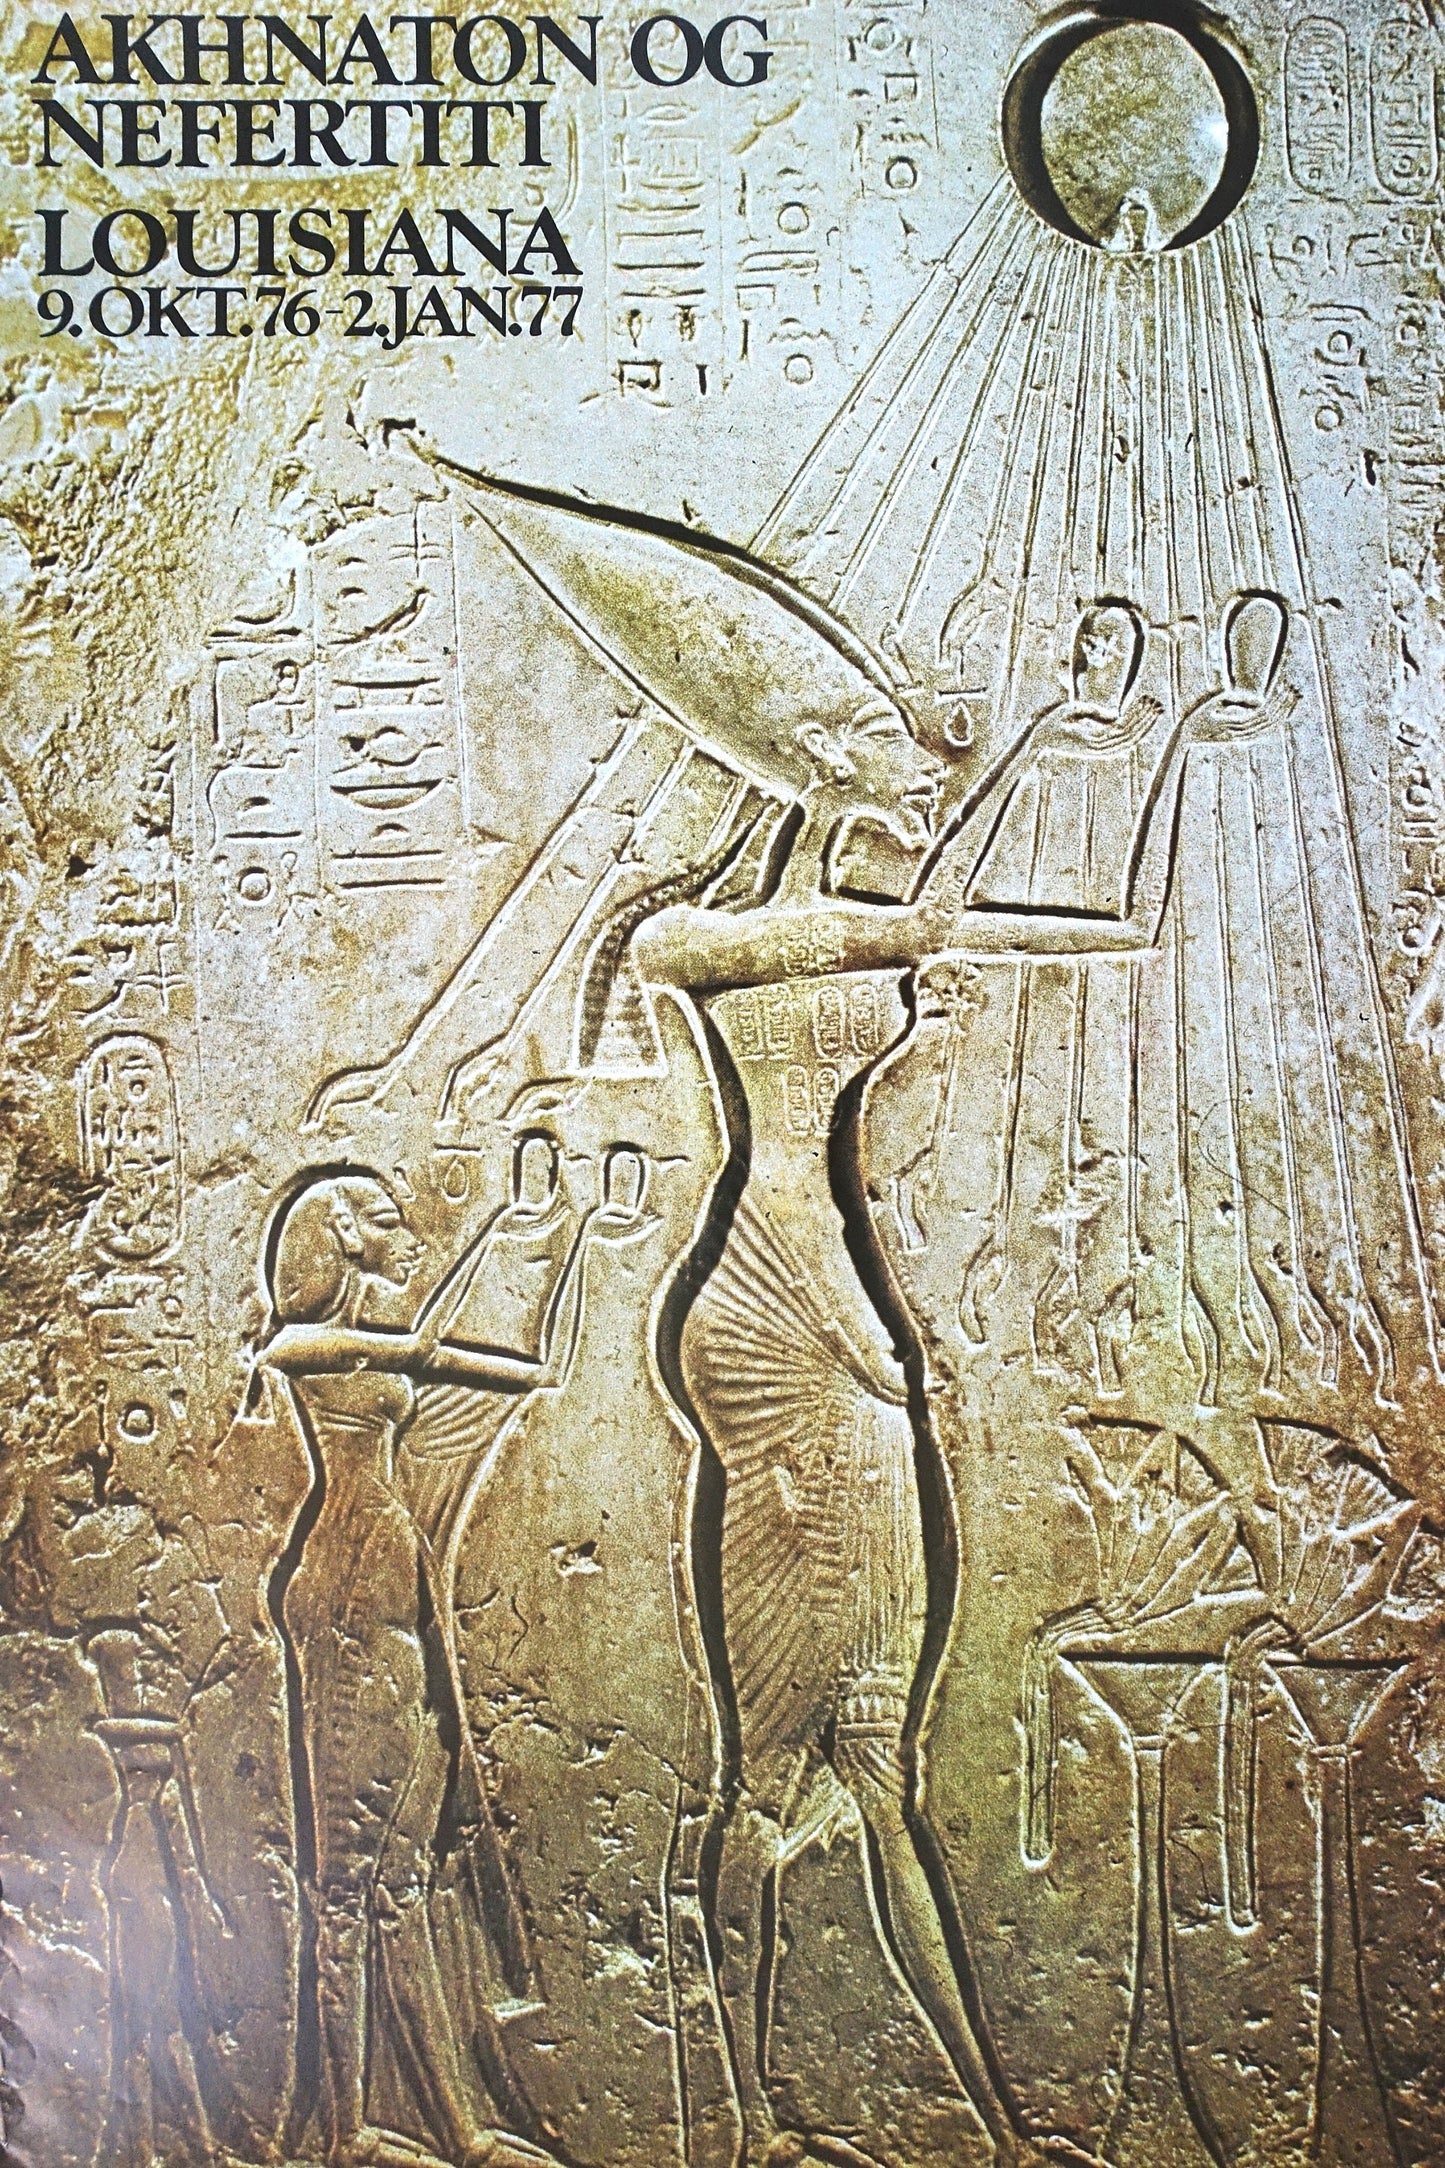 1976 Ancient Egyptian Art on Louisiana Museum of Modern Art - Original Vintage Poster